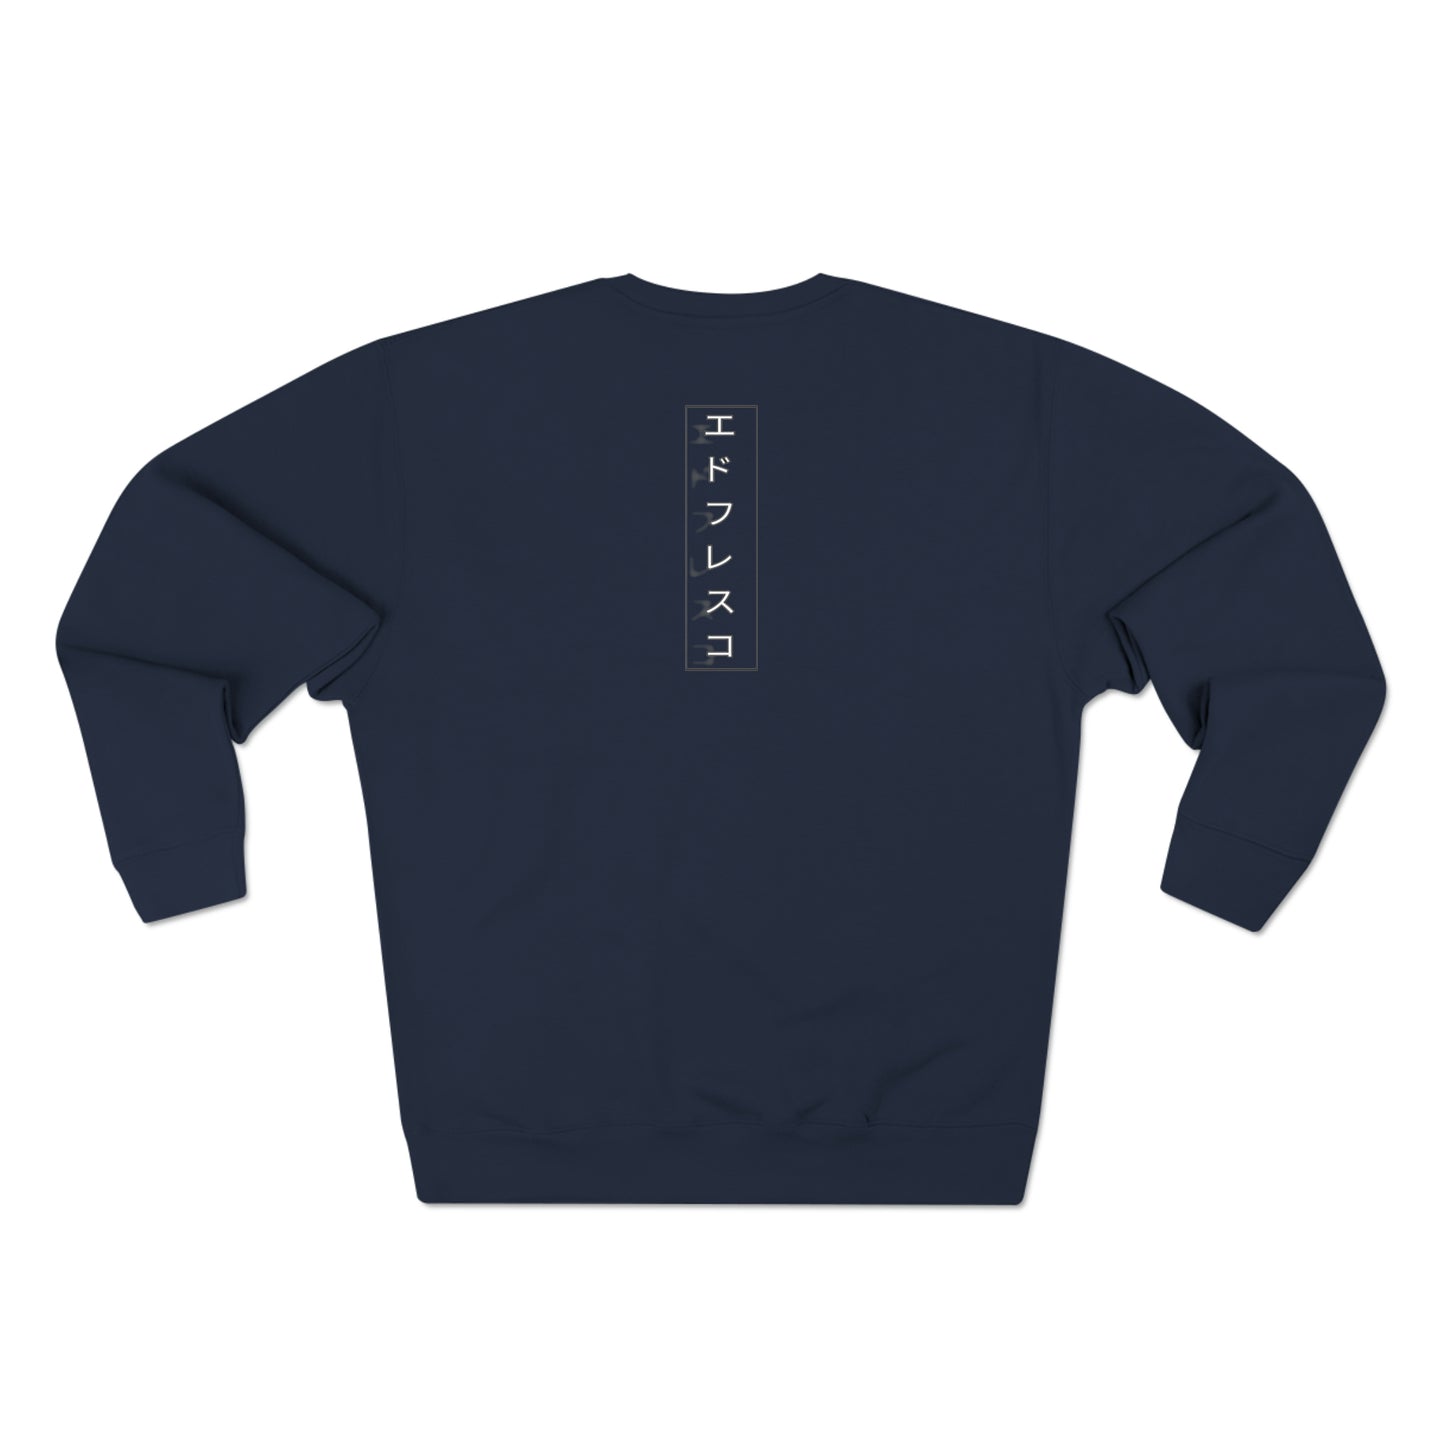 Anime Style Art Unisex Premium Crewneck Sweatshirt- "Fire Leader 2.0"